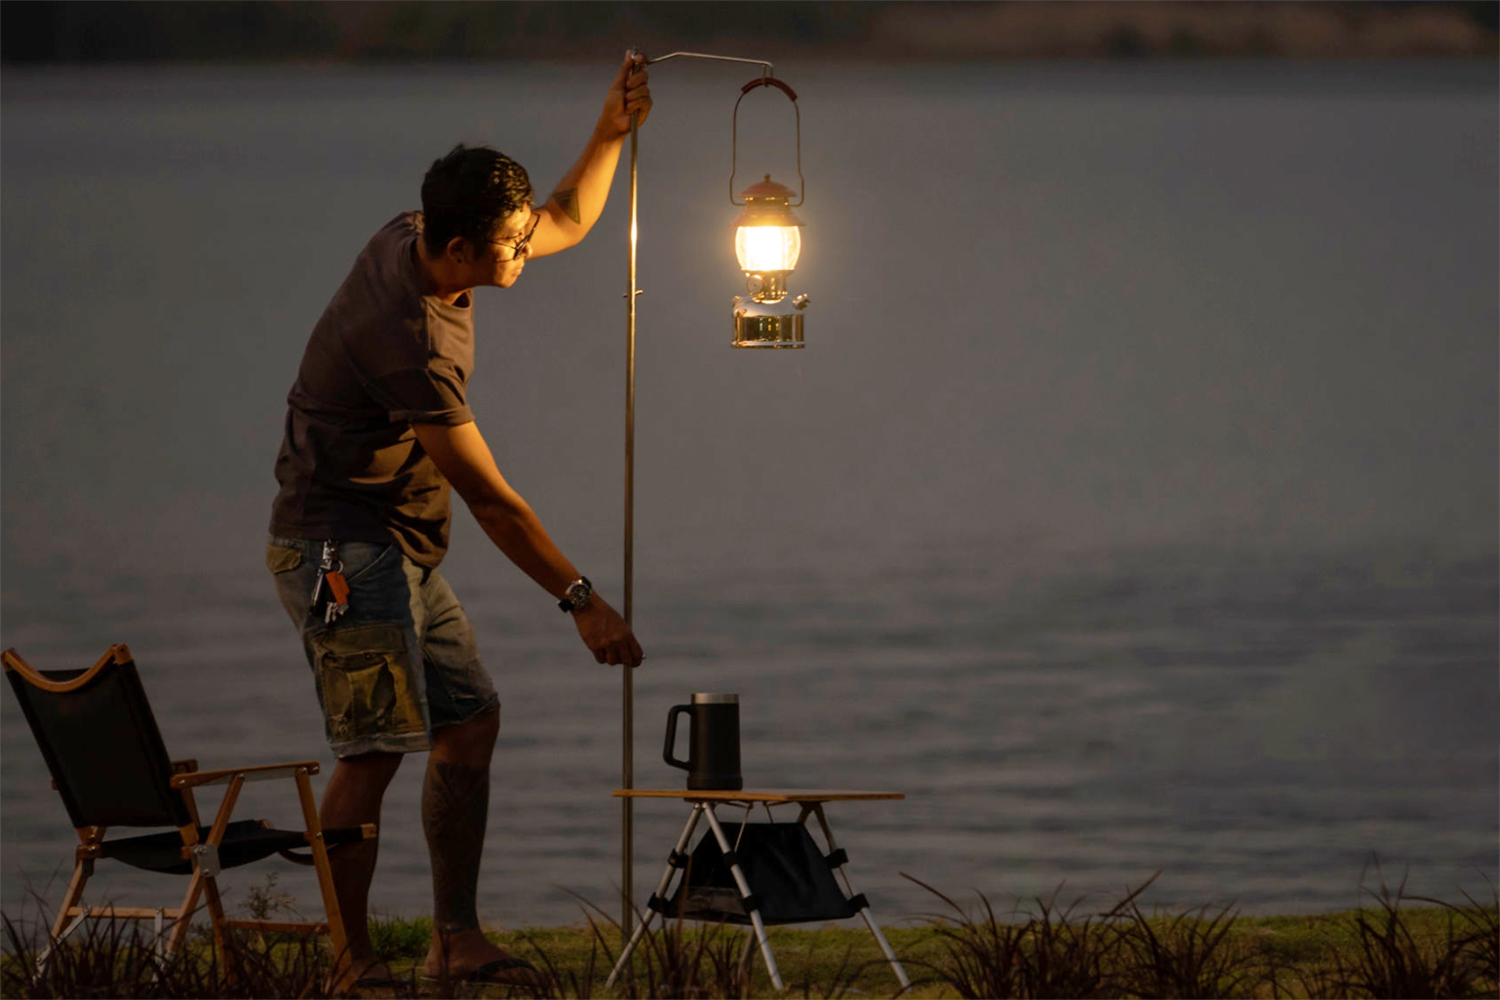 AYL LED Camping Lantern Rechargeable, Super Bright Lantern